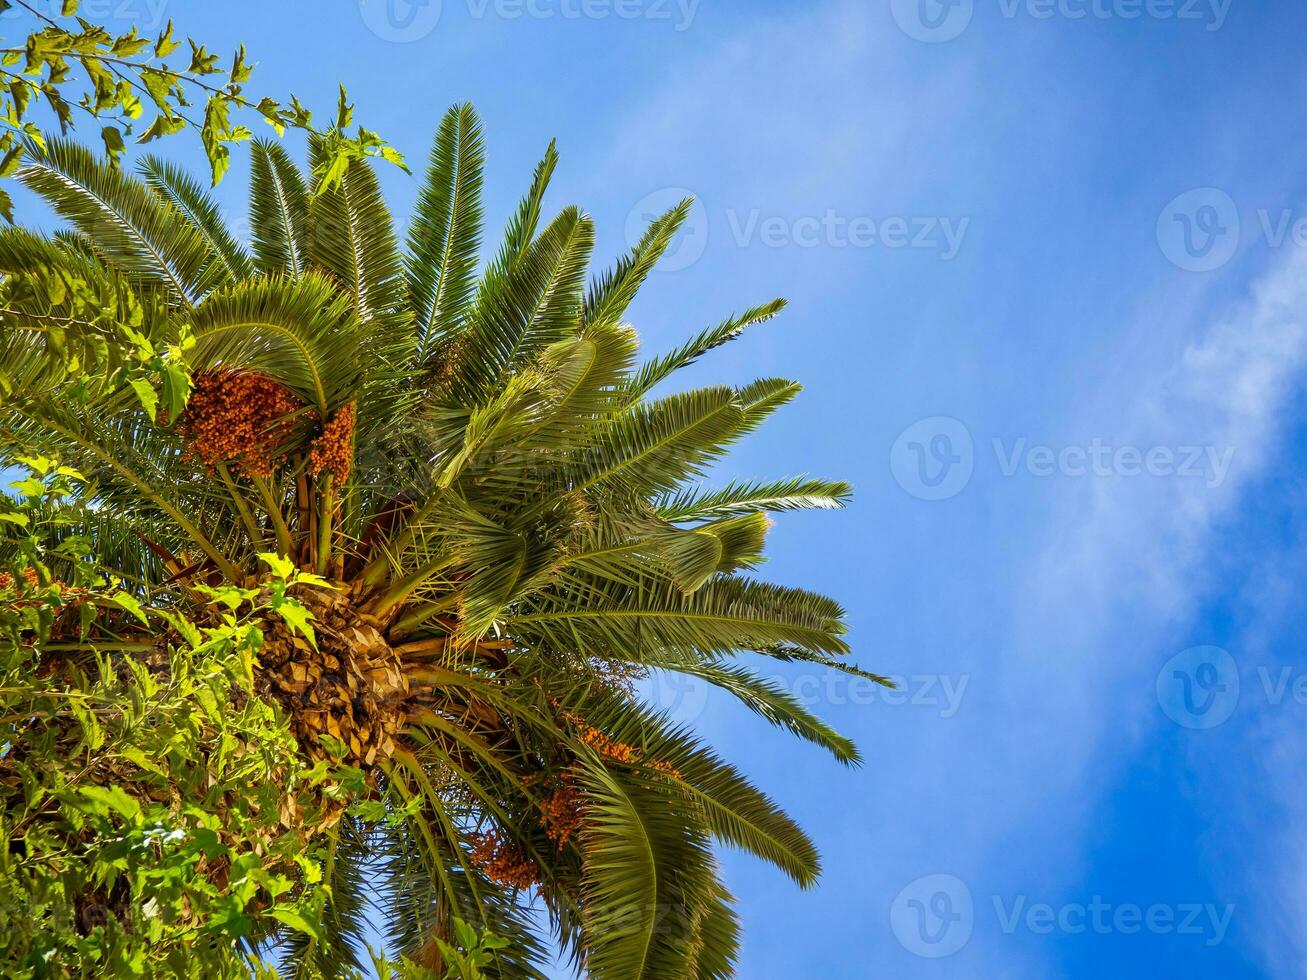 grande palma albero baldacchino con parzialmente nuvoloso cielo sfondo foto